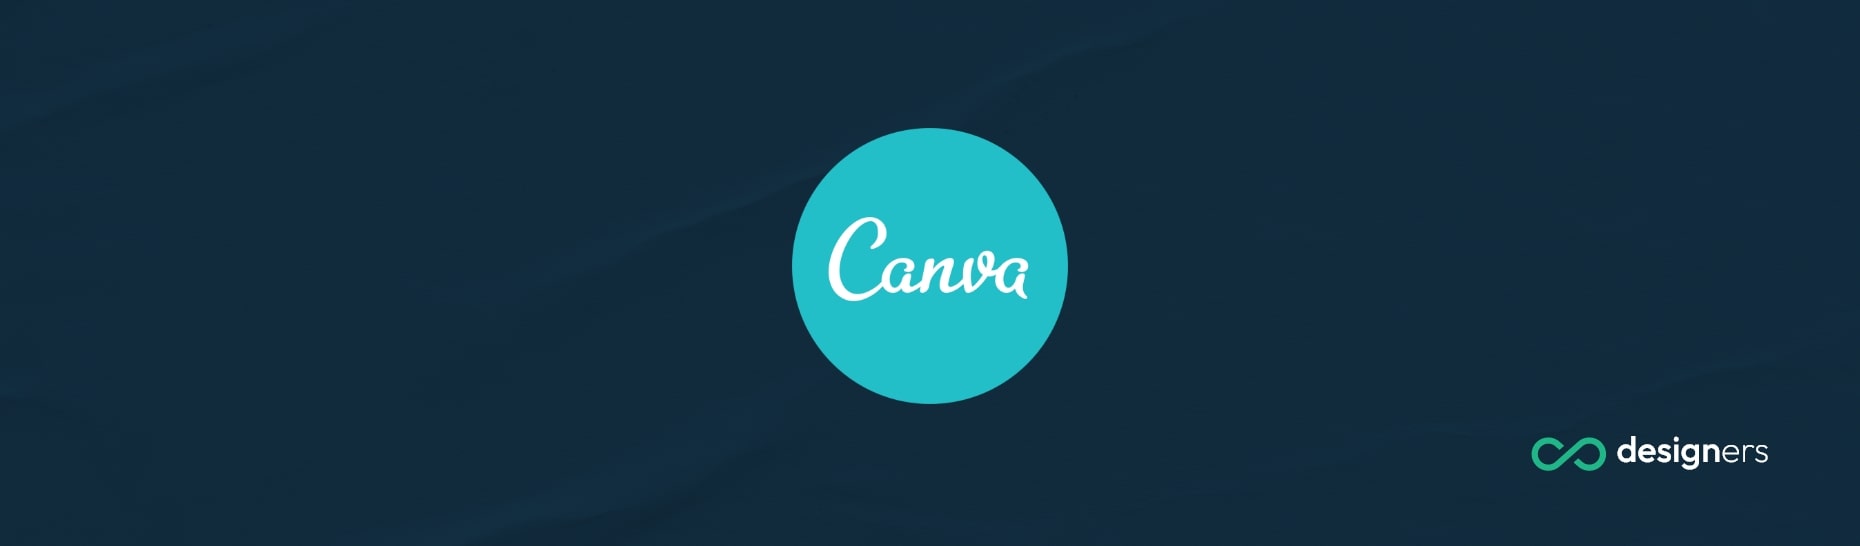 Is Canva a Remote Company?